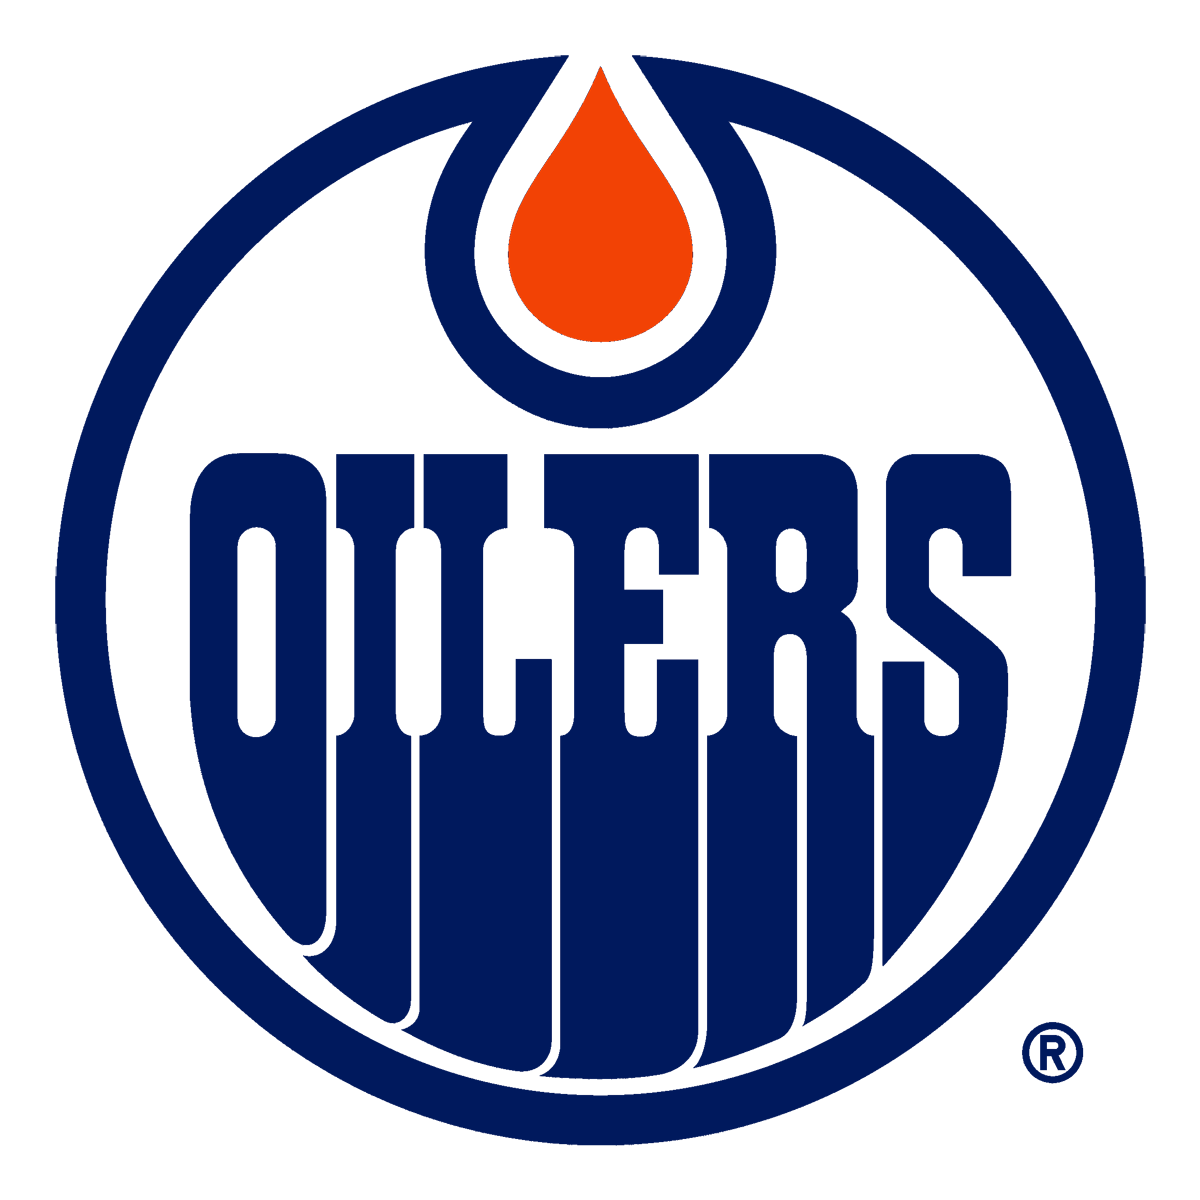 Edmonton Oilers Logo 1979-1986